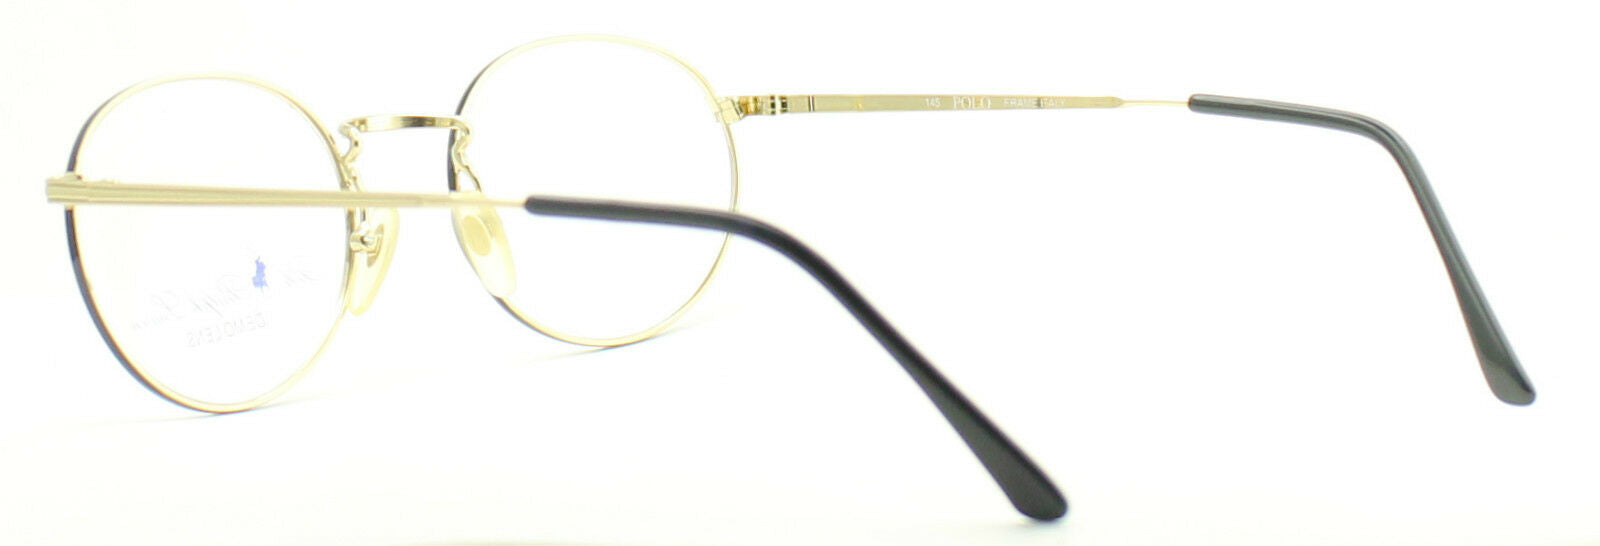 RALPH LAUREN POLO Classic XVI/N 075 RX Optical Eyewear FRAMES Glasses Italy -New